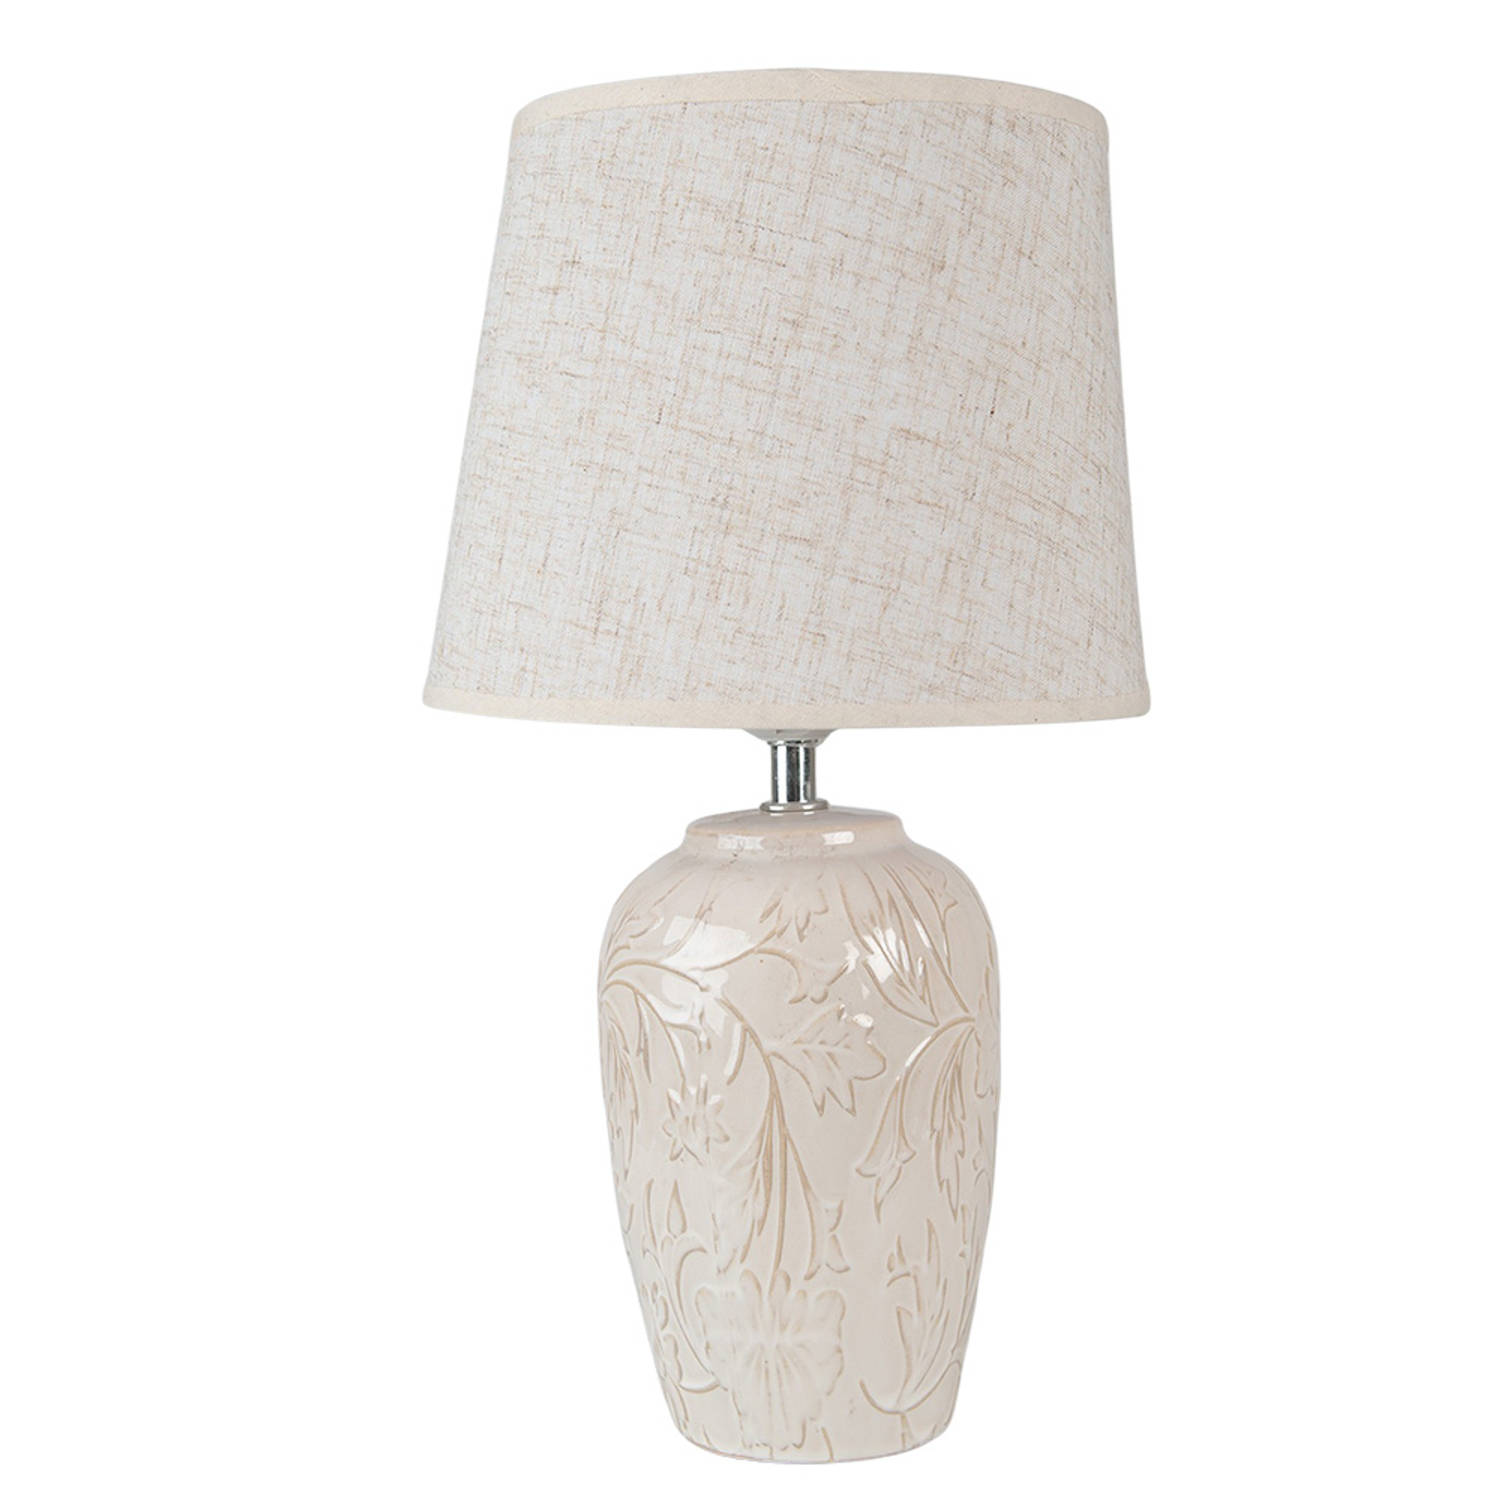 HAES DECO - Tafellamp - Modern Chic - Elegante Lamp, formaat Ø 20x37 cm - Wit / Beige Keramiek - Bureaulamp, Sfeerlamp, Nachtlampje